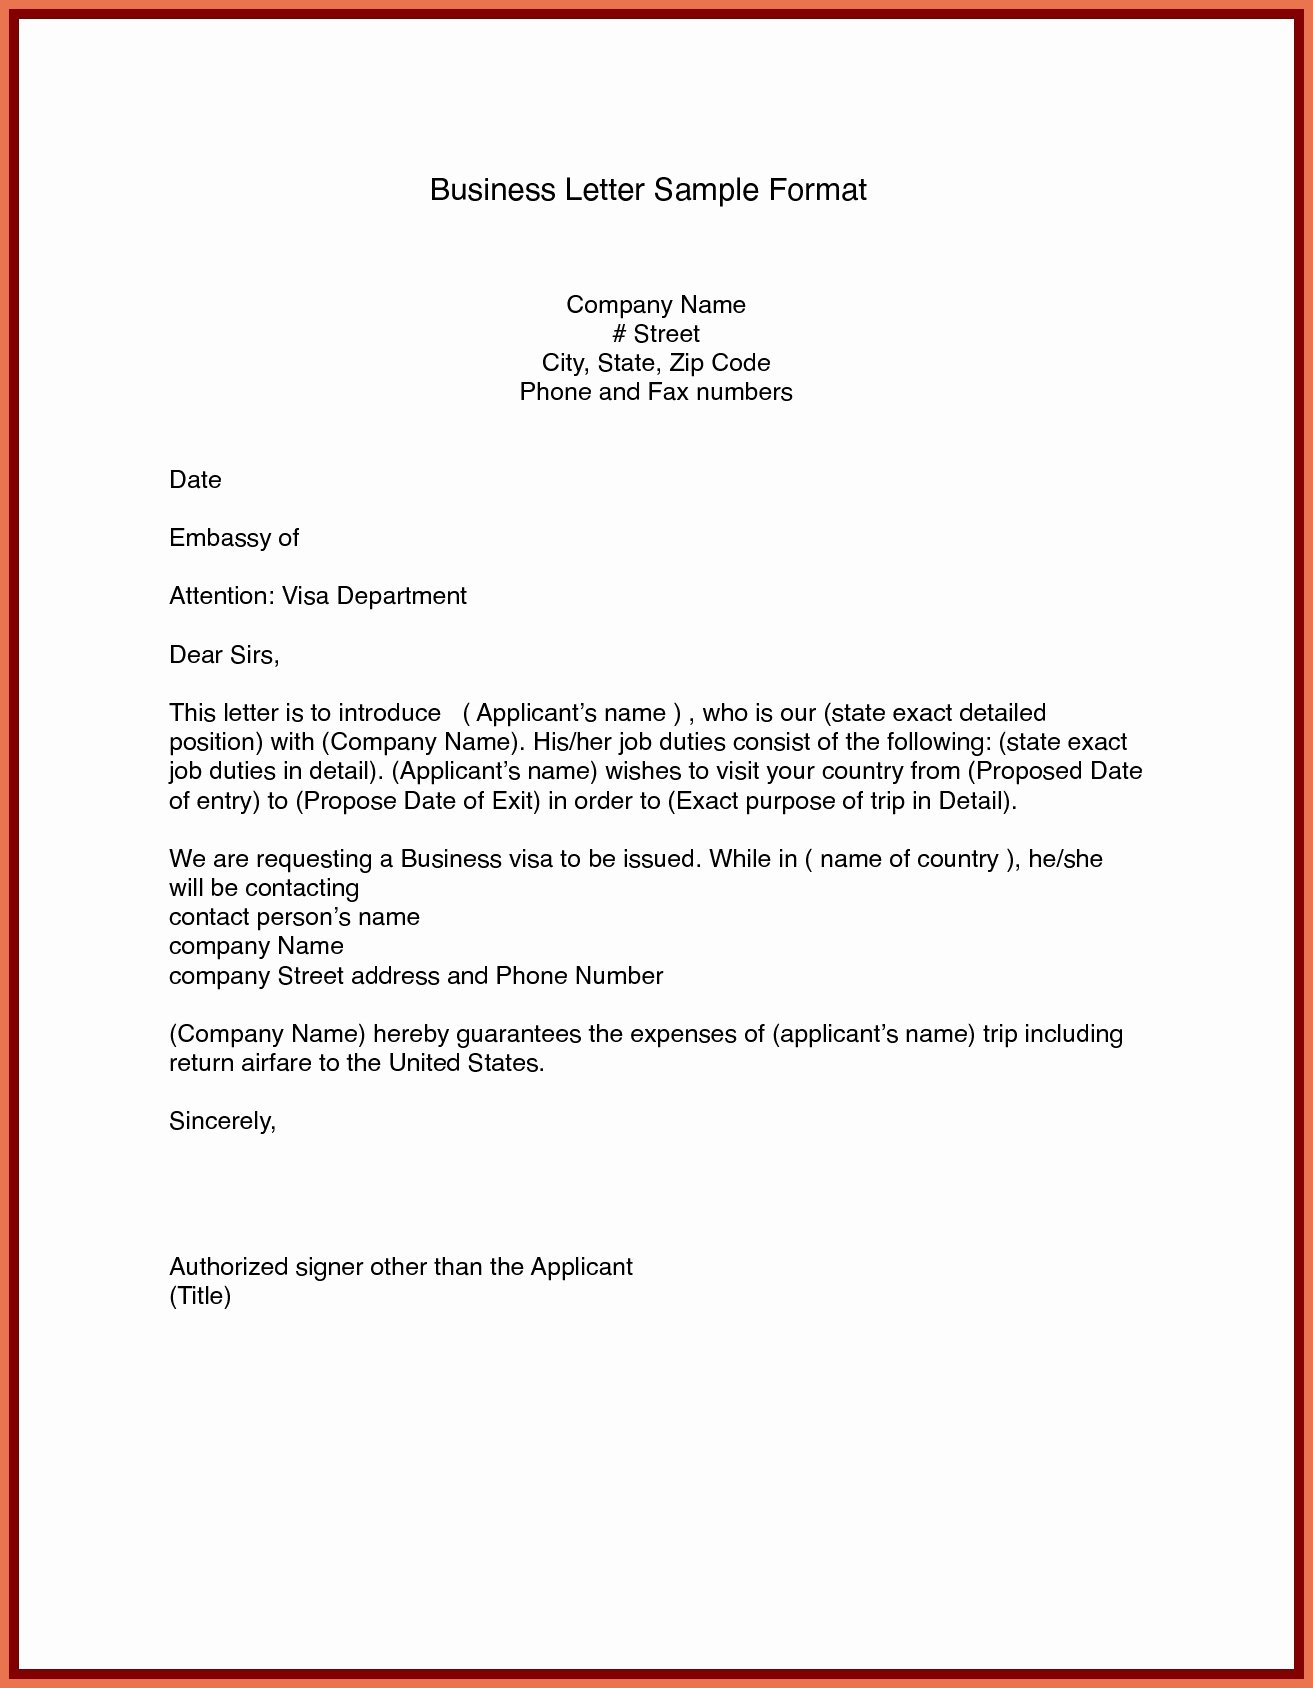 Sample Business Letter format